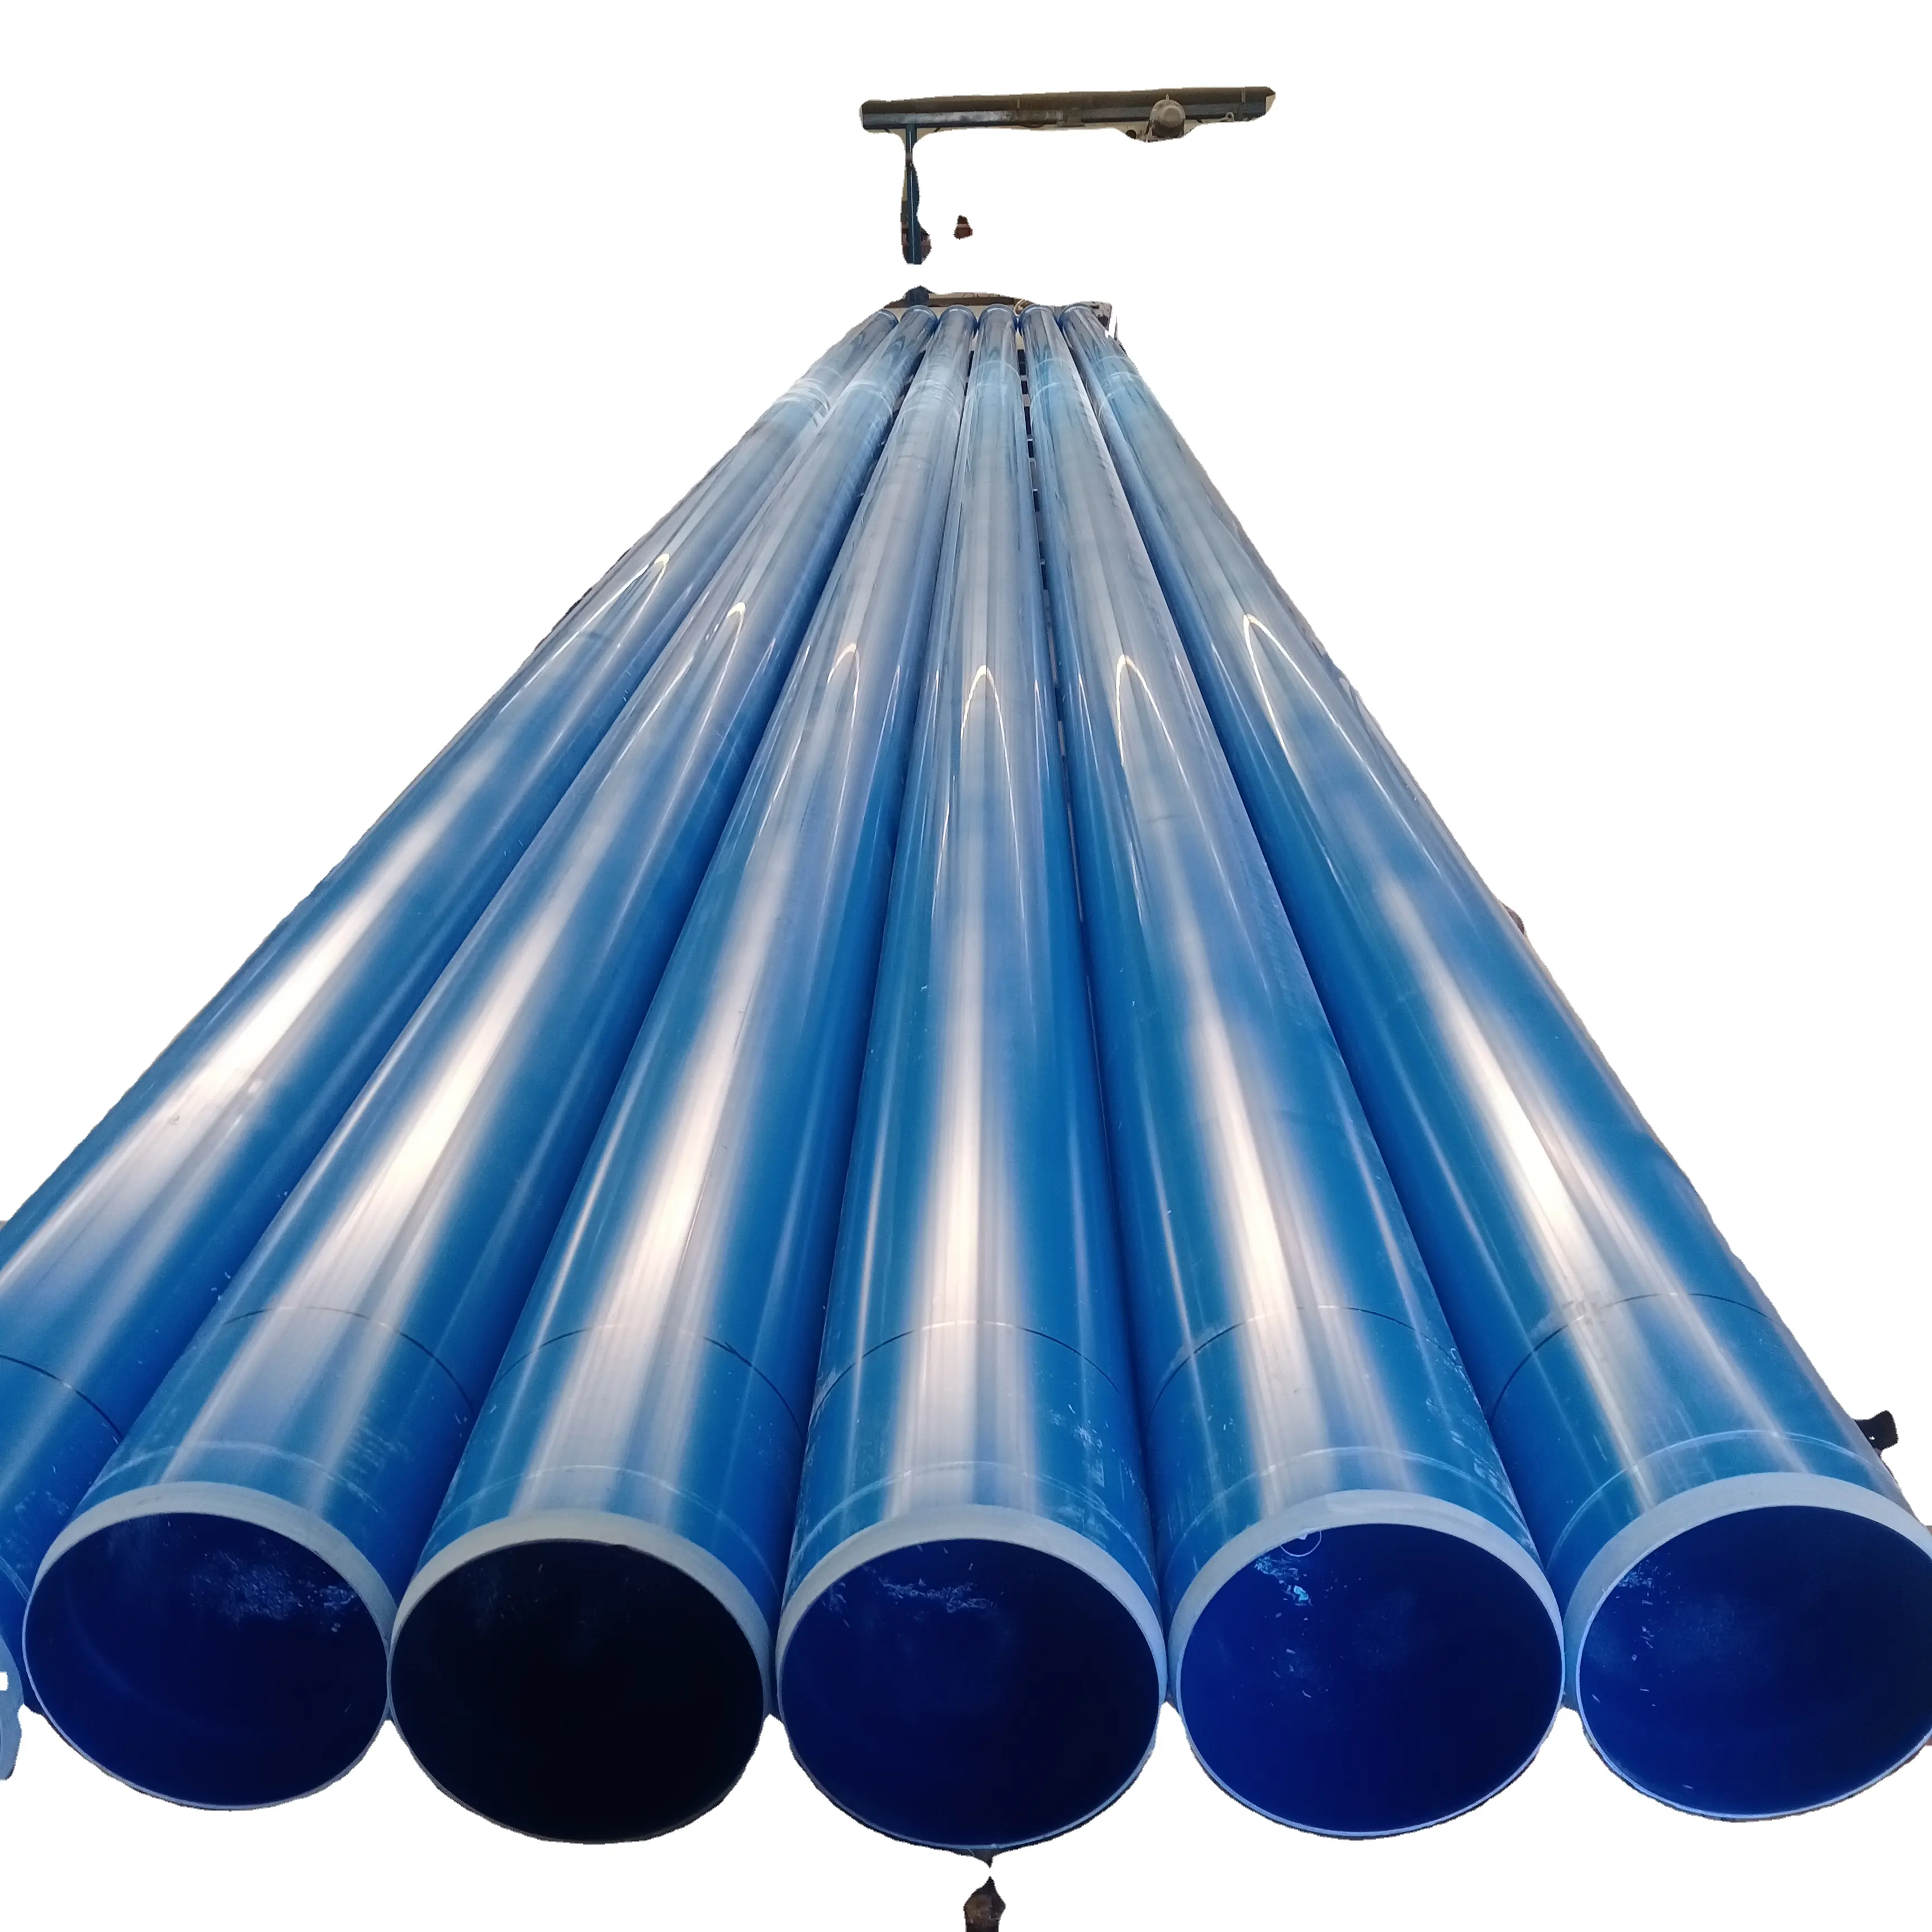 Tubo de PVC junta de anillo de goma tubo upvc clase 16 12.5bar lista de precios de 6 pulgadas 10 pulgadas 355mm agua potable de grado alimenticio